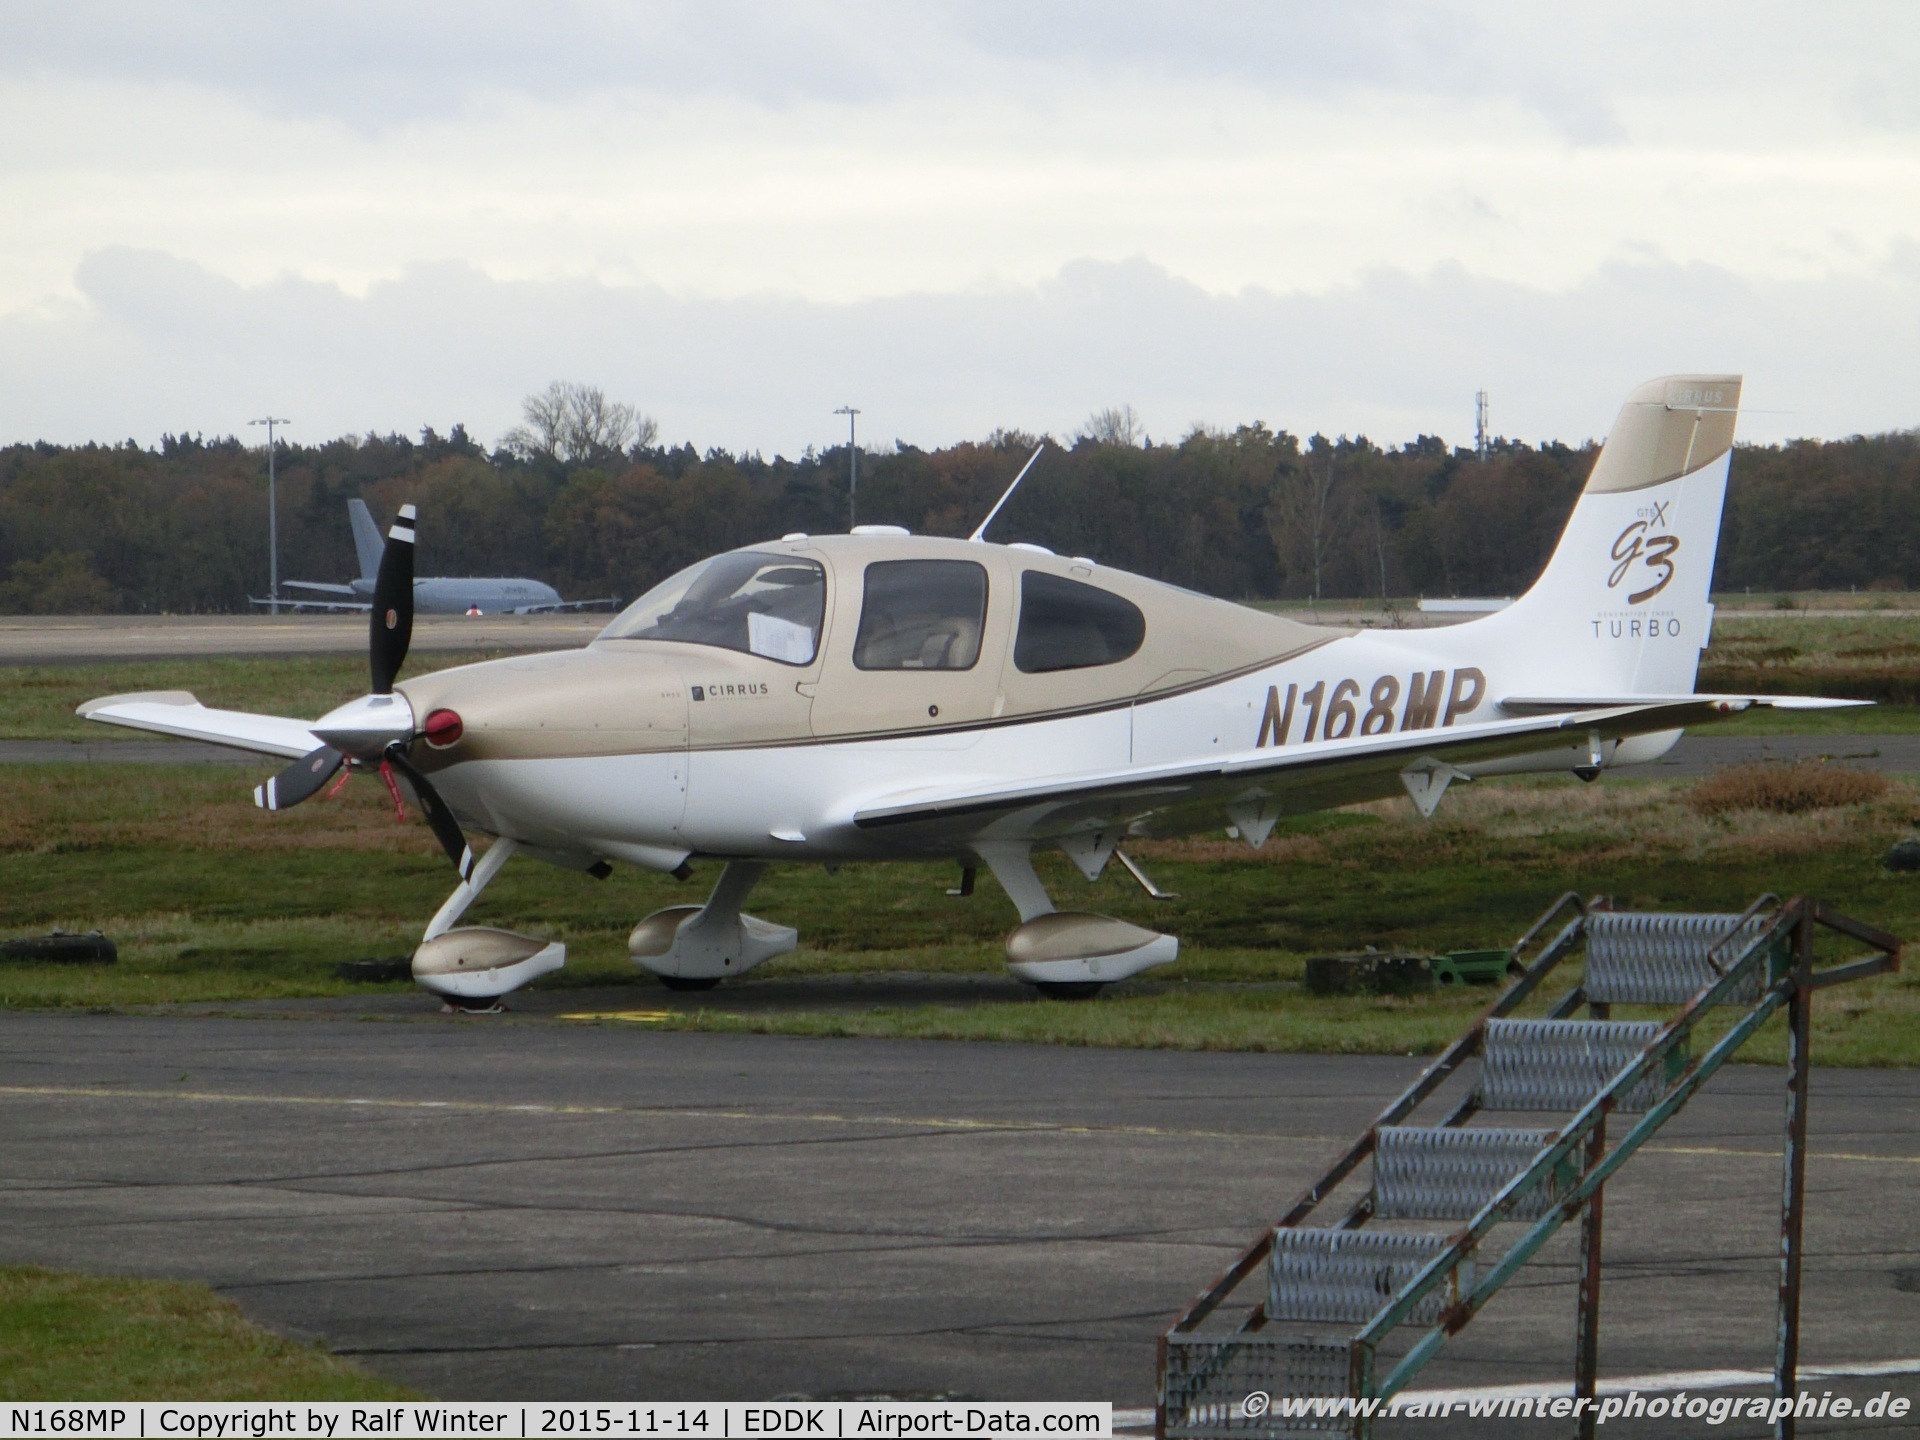 N168MP, 2007 Cirrus SR22 G3 GTSX C/N 2692, Cirrus Design SR22 - Aircraft Guaranty Corp. - 2692 - N168MP - 14.11.2015 - CGN